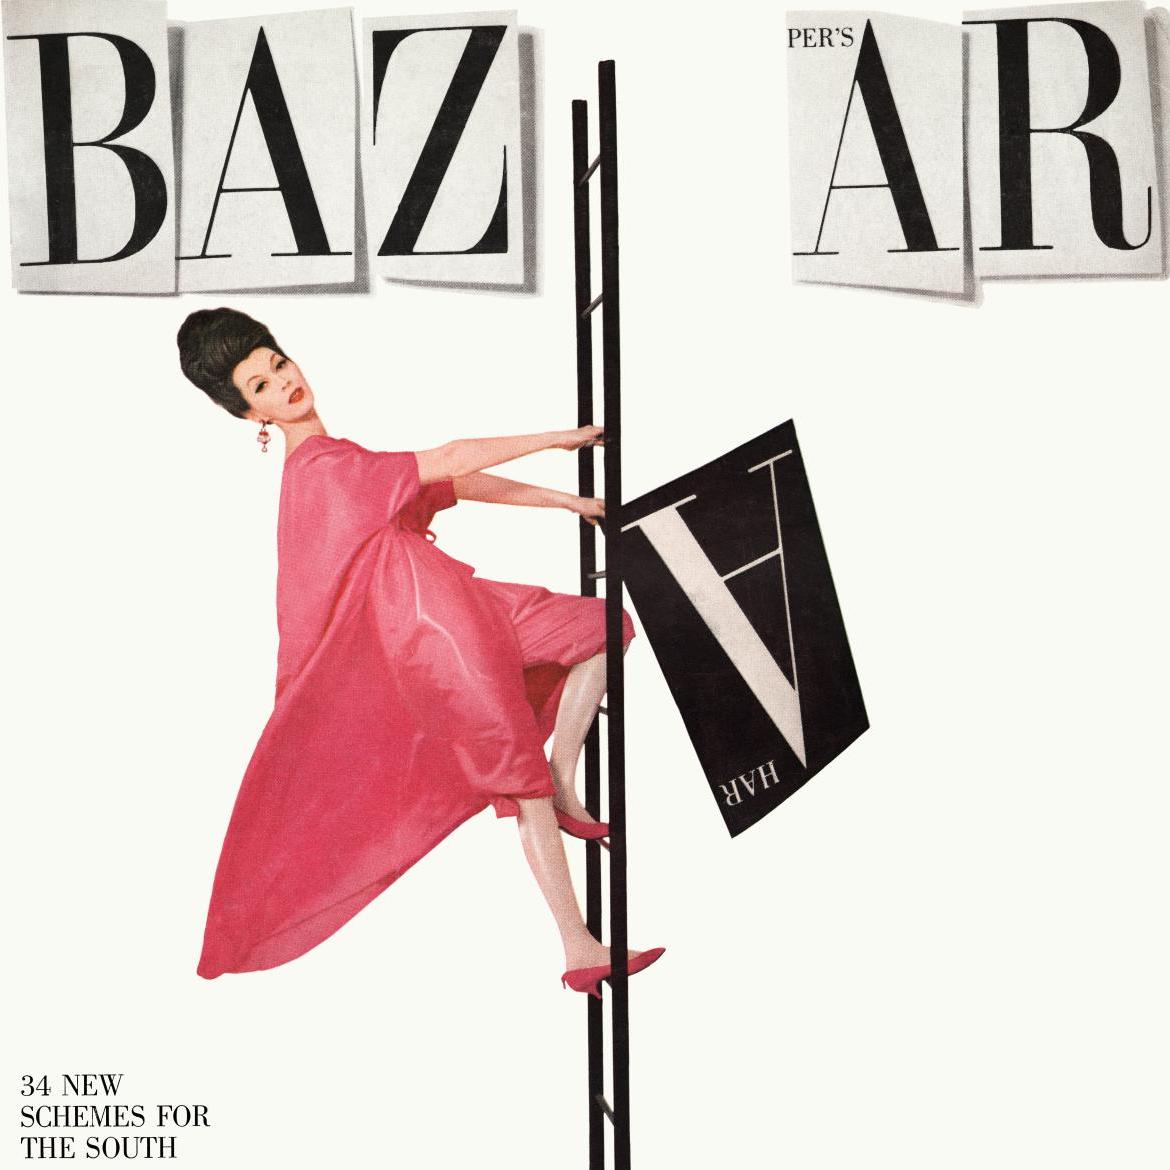 Harper’s Bazaar, premier magazine de mode au MAD